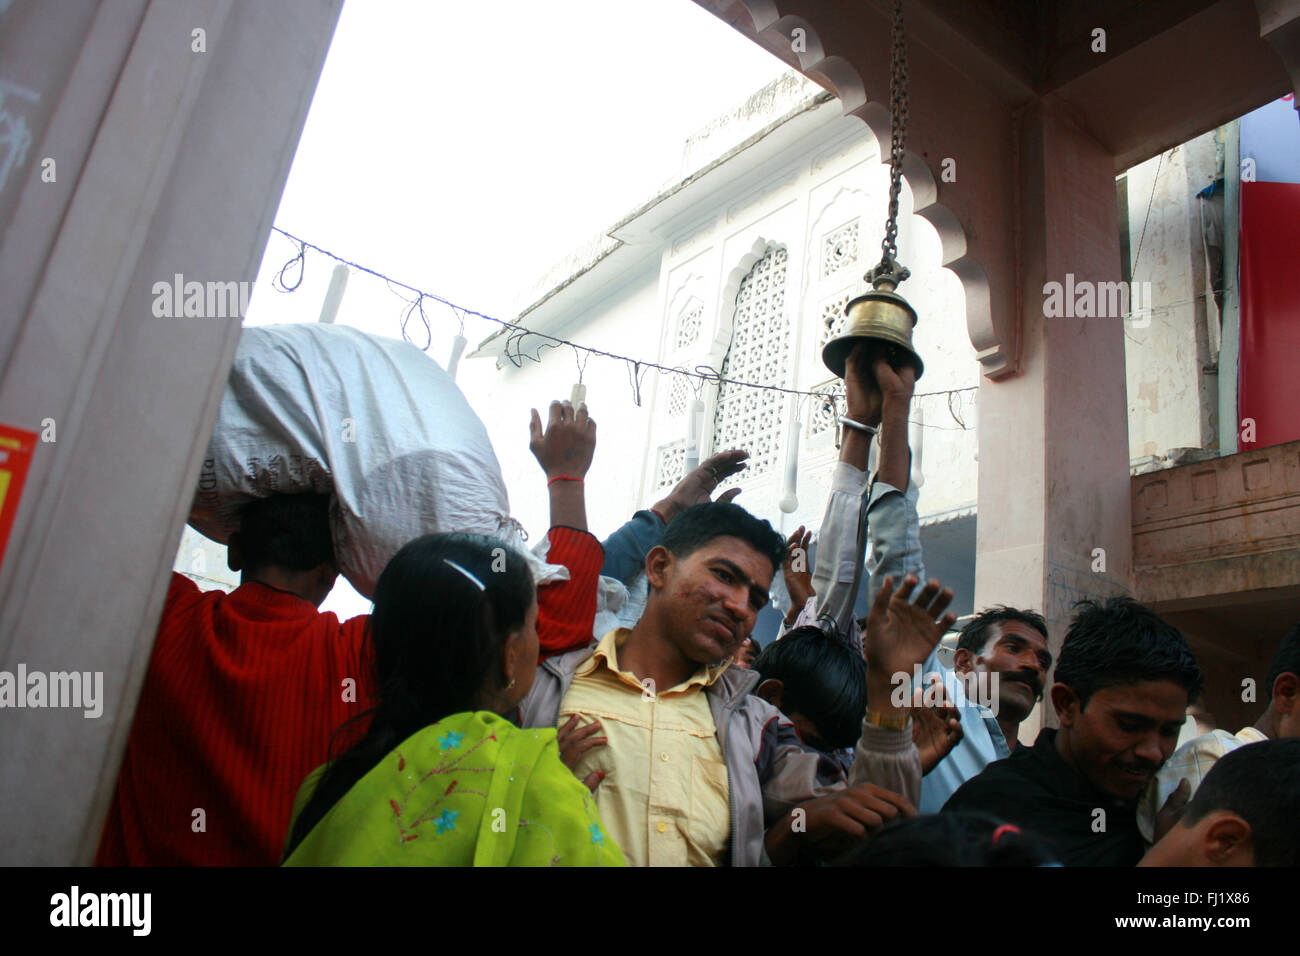 Pushkar mela camel fair , people , atmosphere and street scene Stock Photo